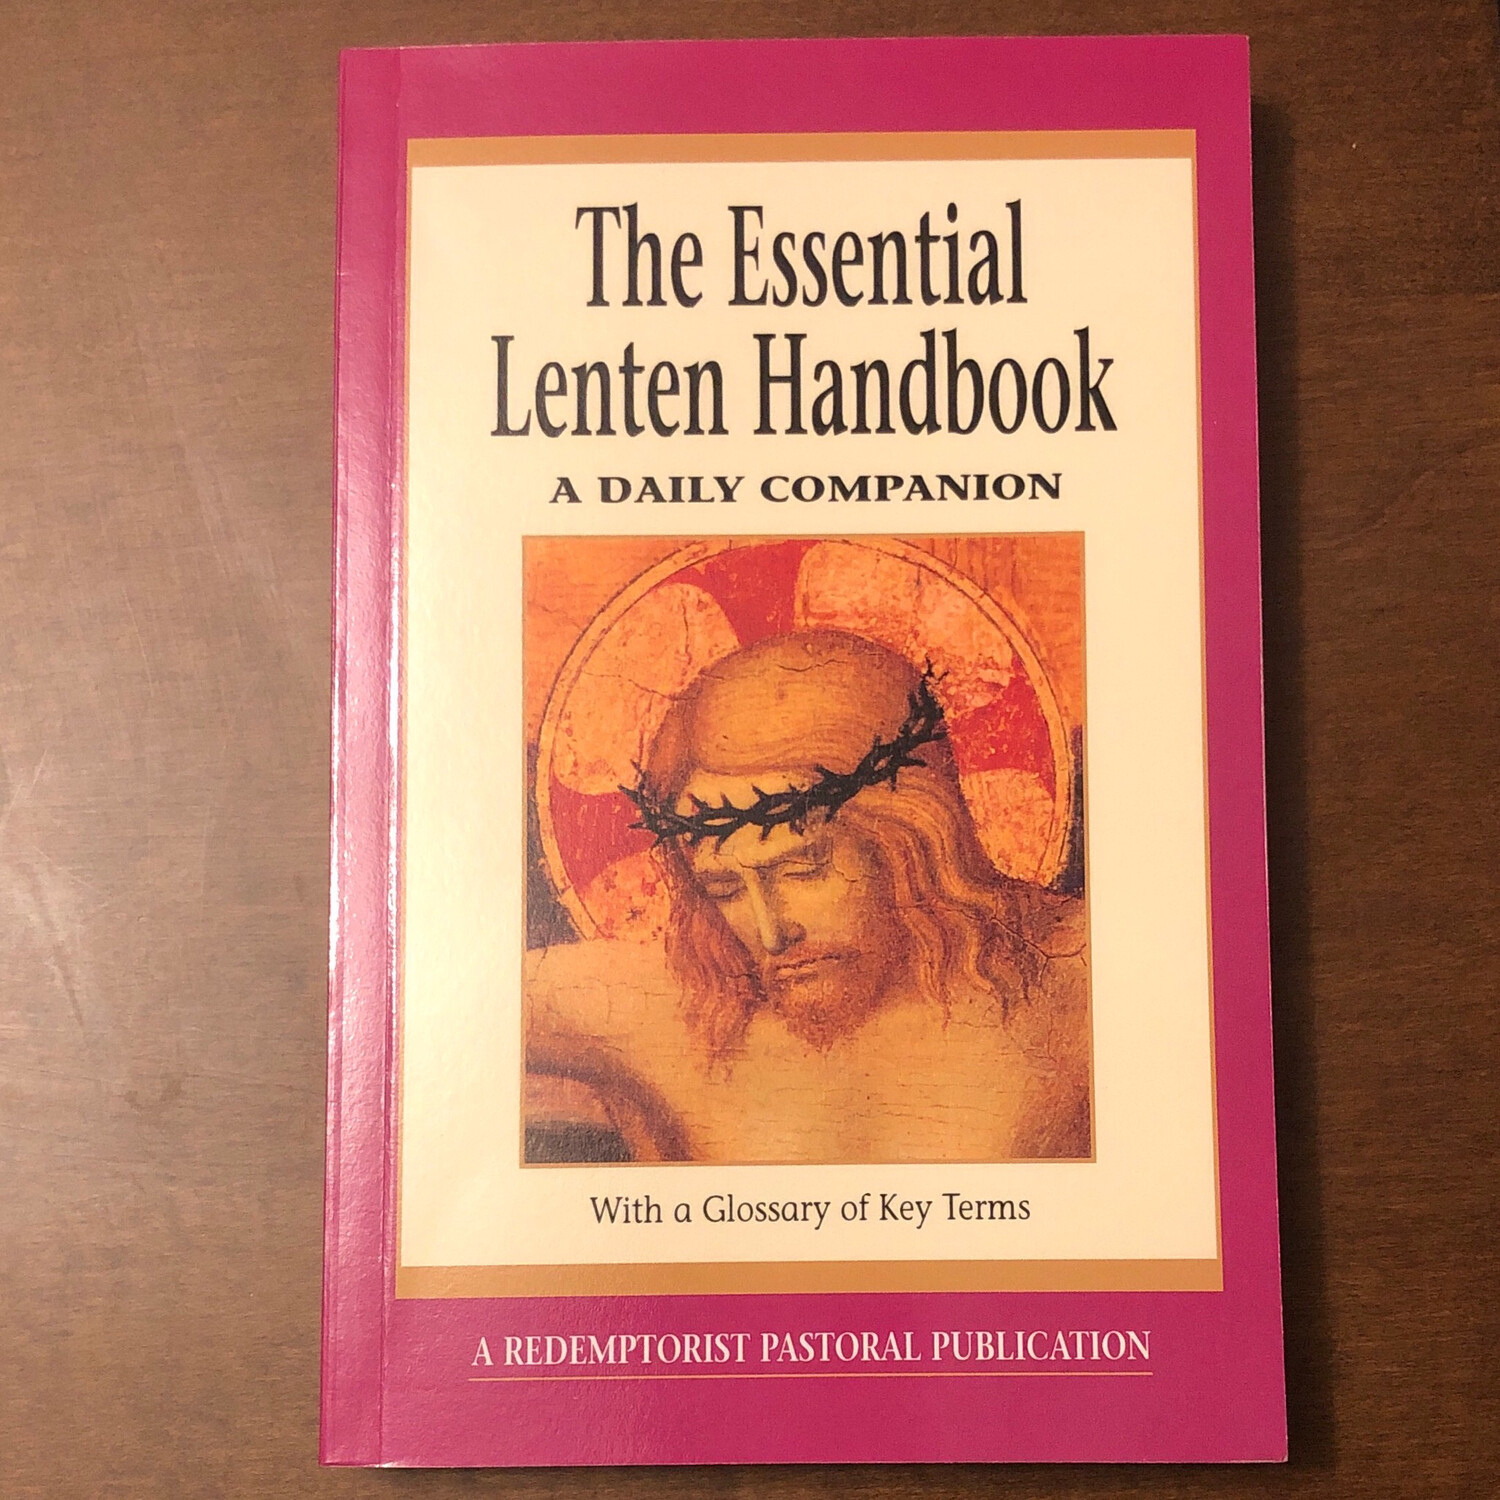 The Essential Lenten Handbook: A Daily Companion